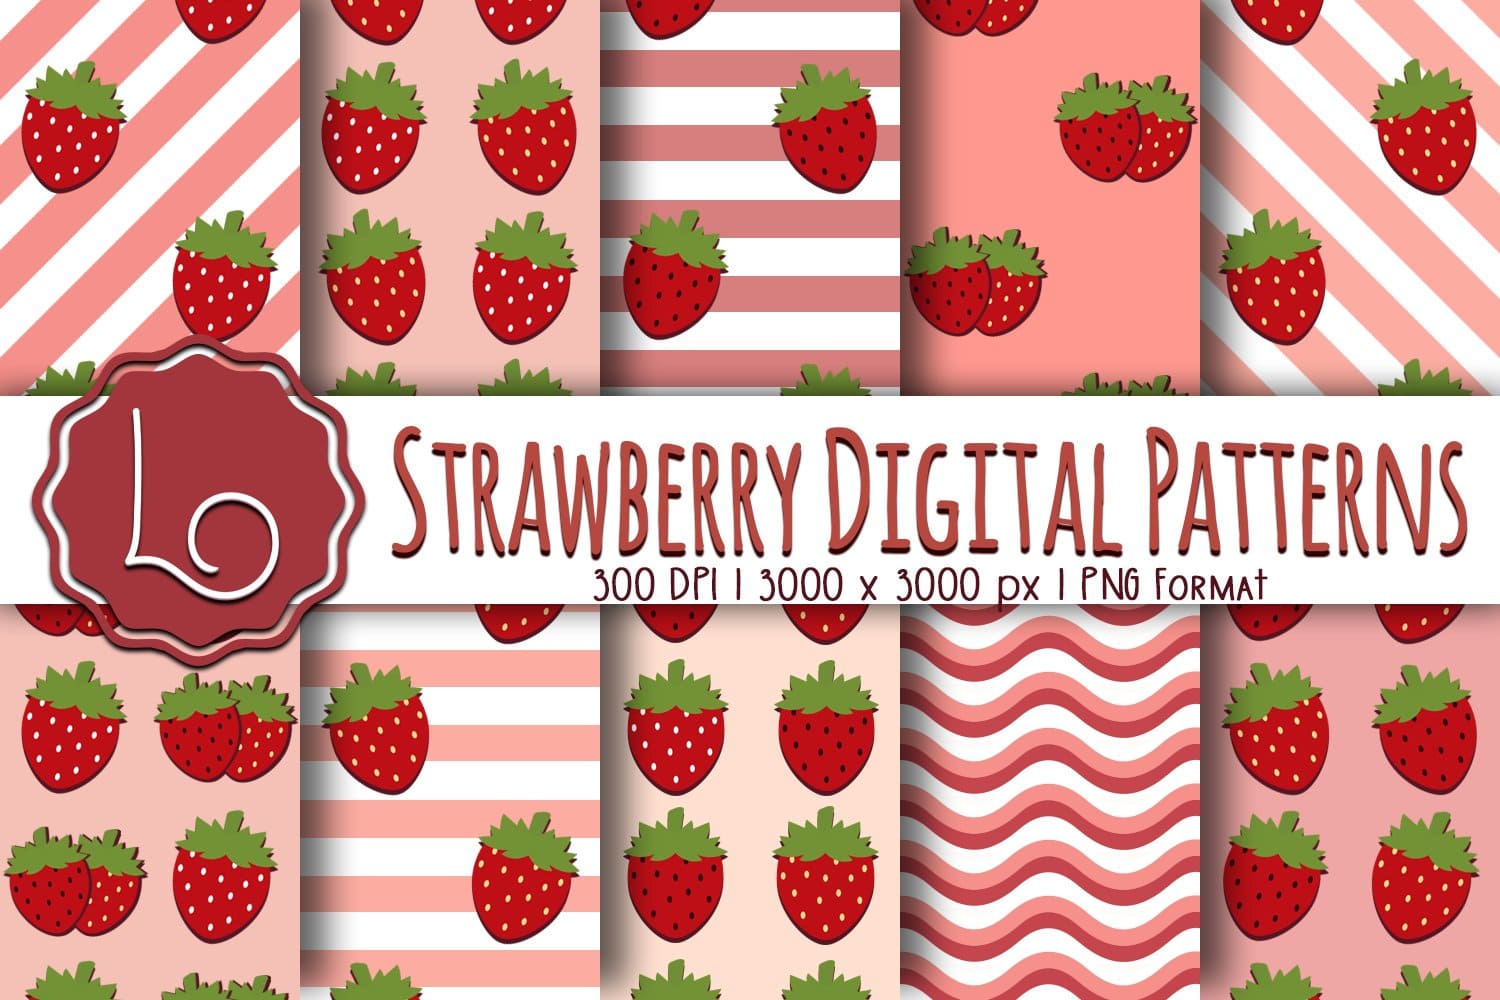 Strawberry digital pattern on geometric or uniform backgrounds.